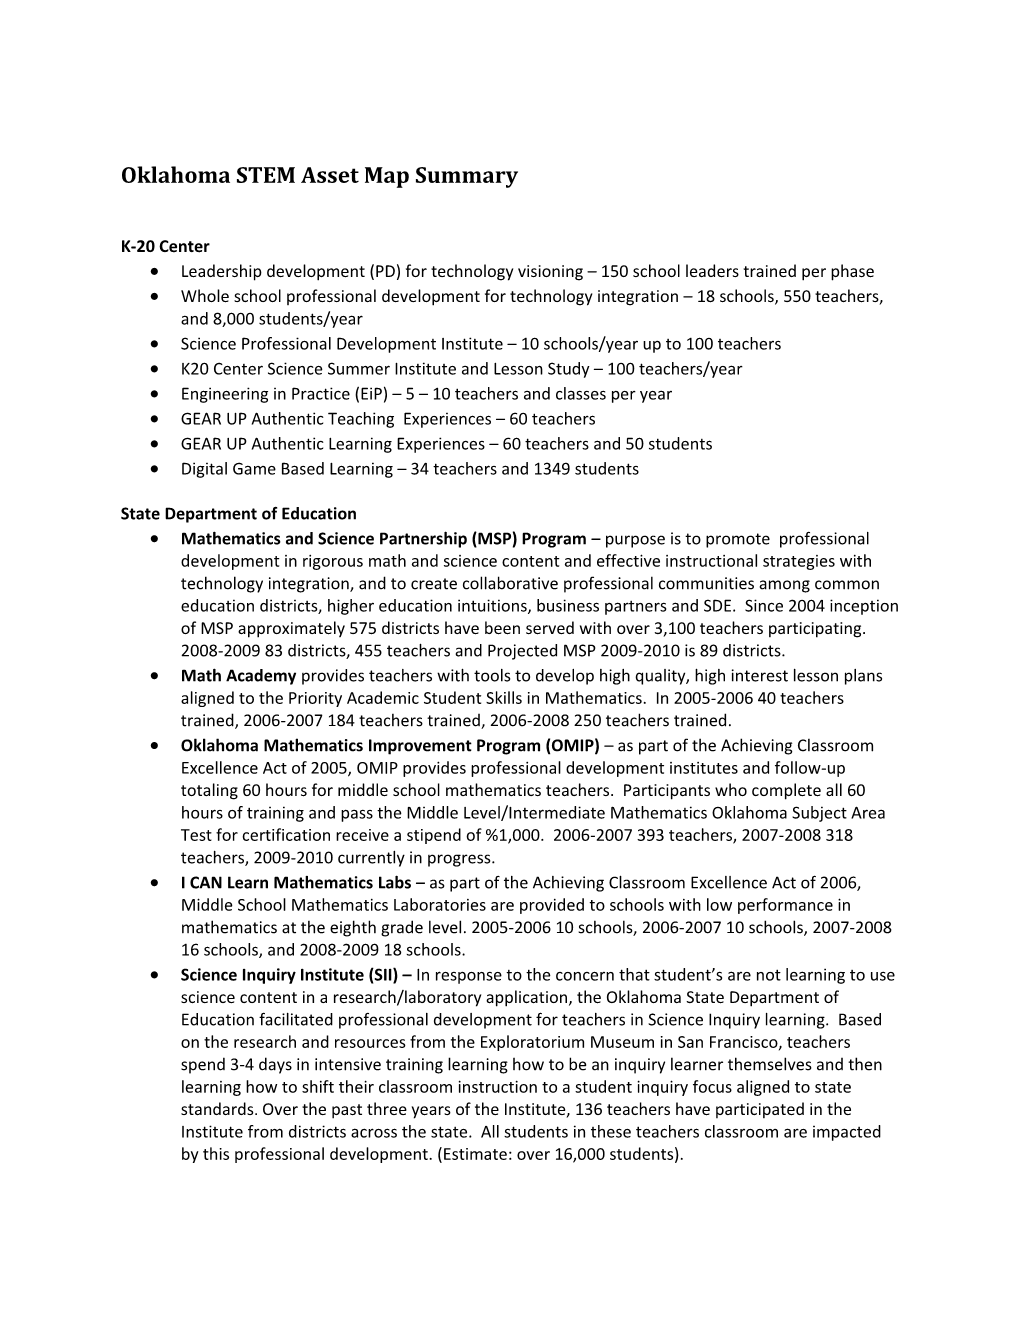 P2-1 Oklahoma STEM Asset Map Summary